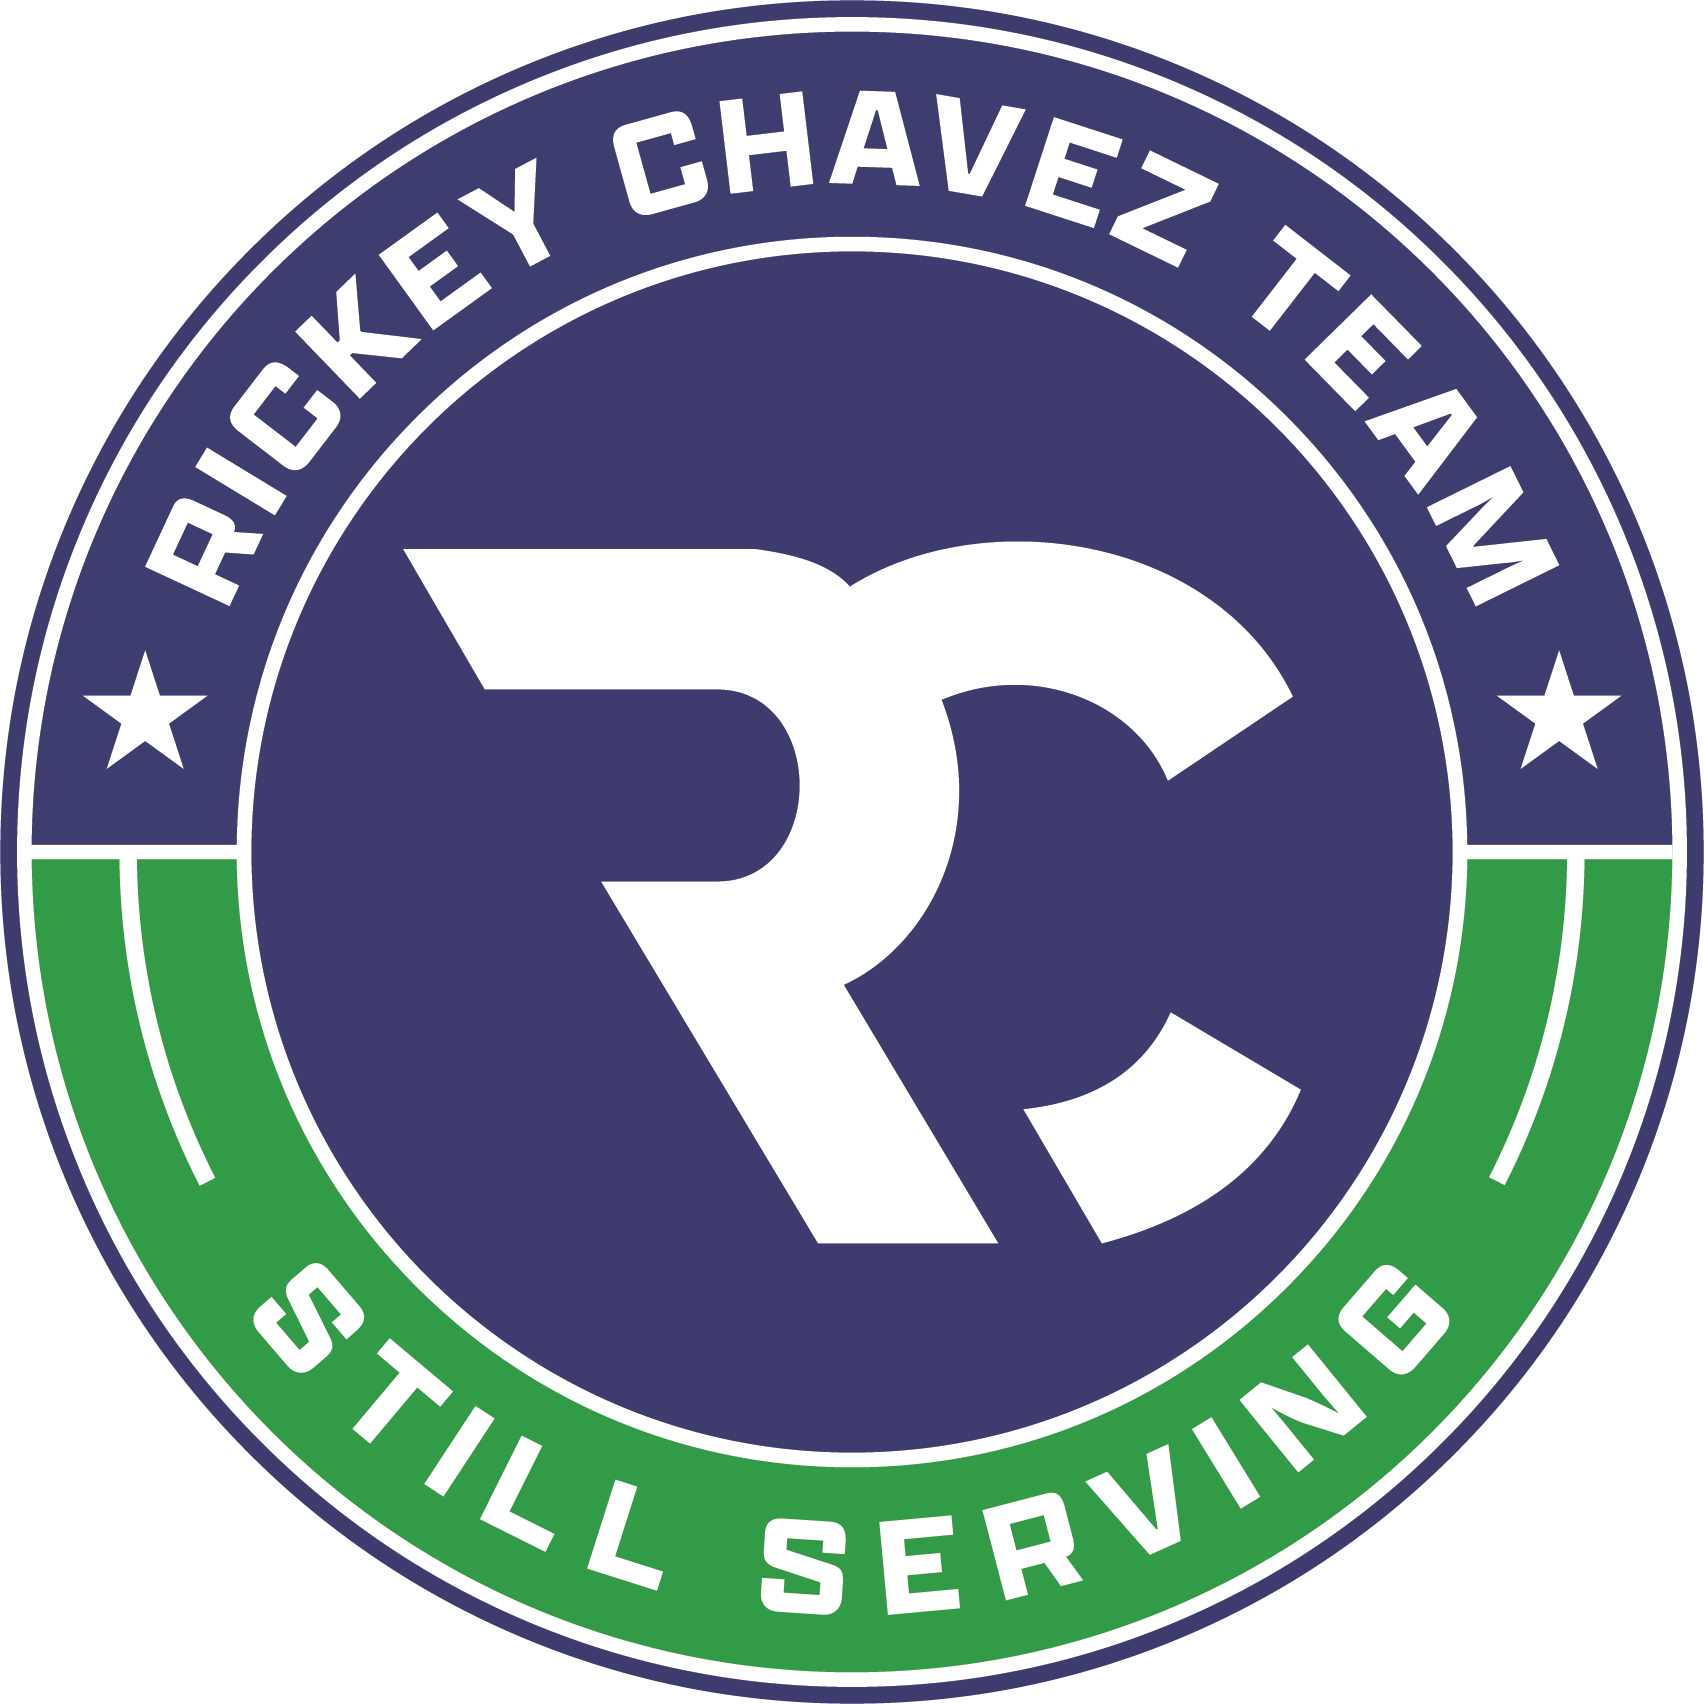 The Rickey Chavez Team